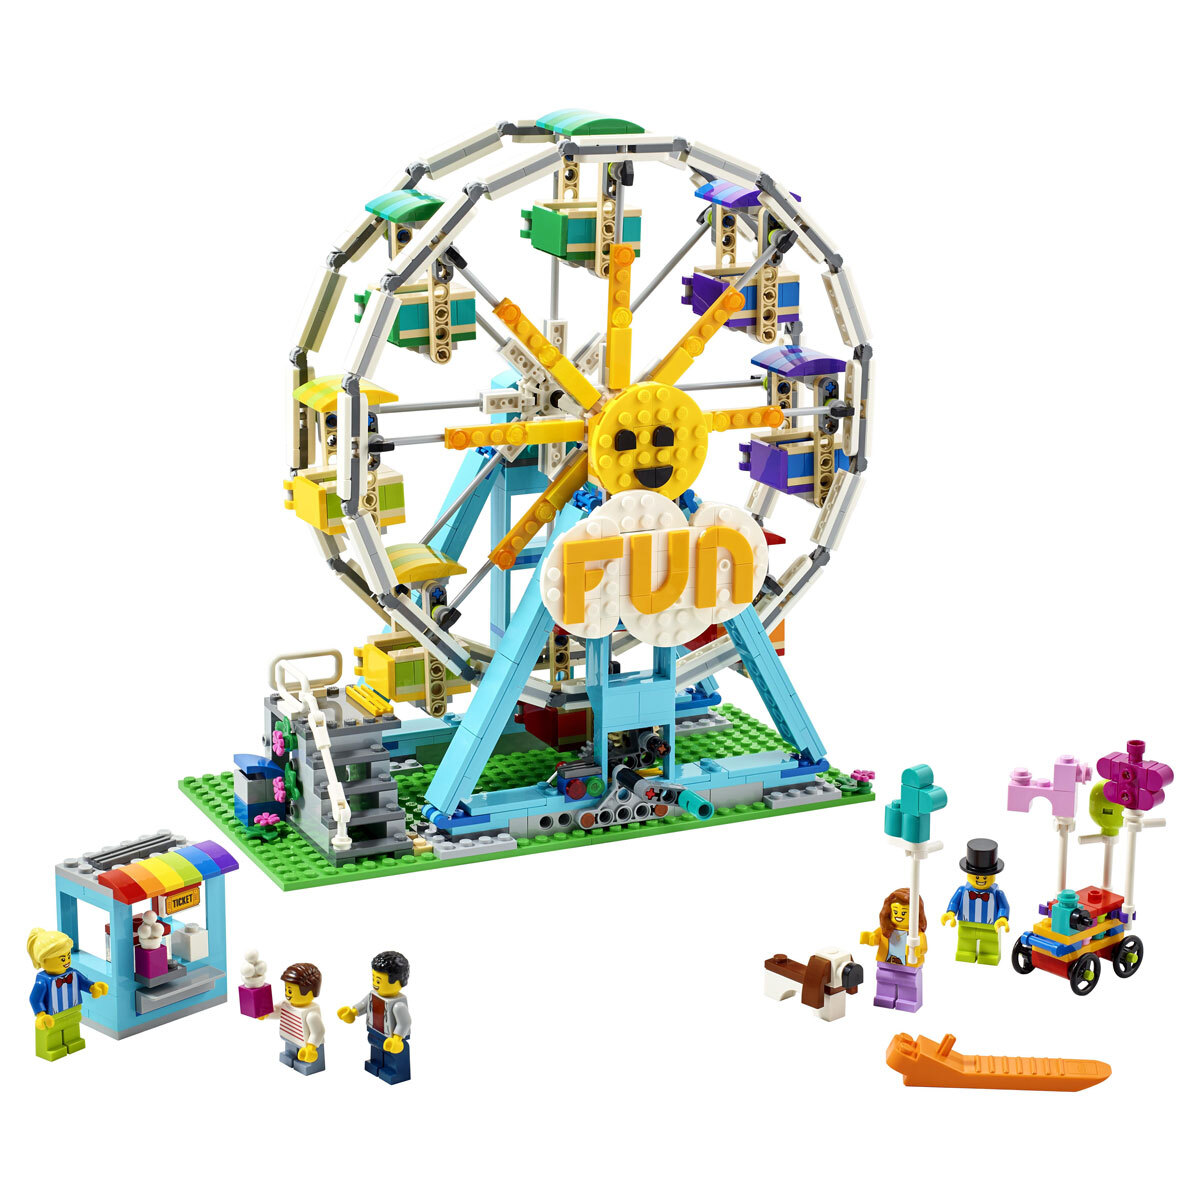 Buy LEGO Creator Ferris Wheel Overview Image at costco.co.uk